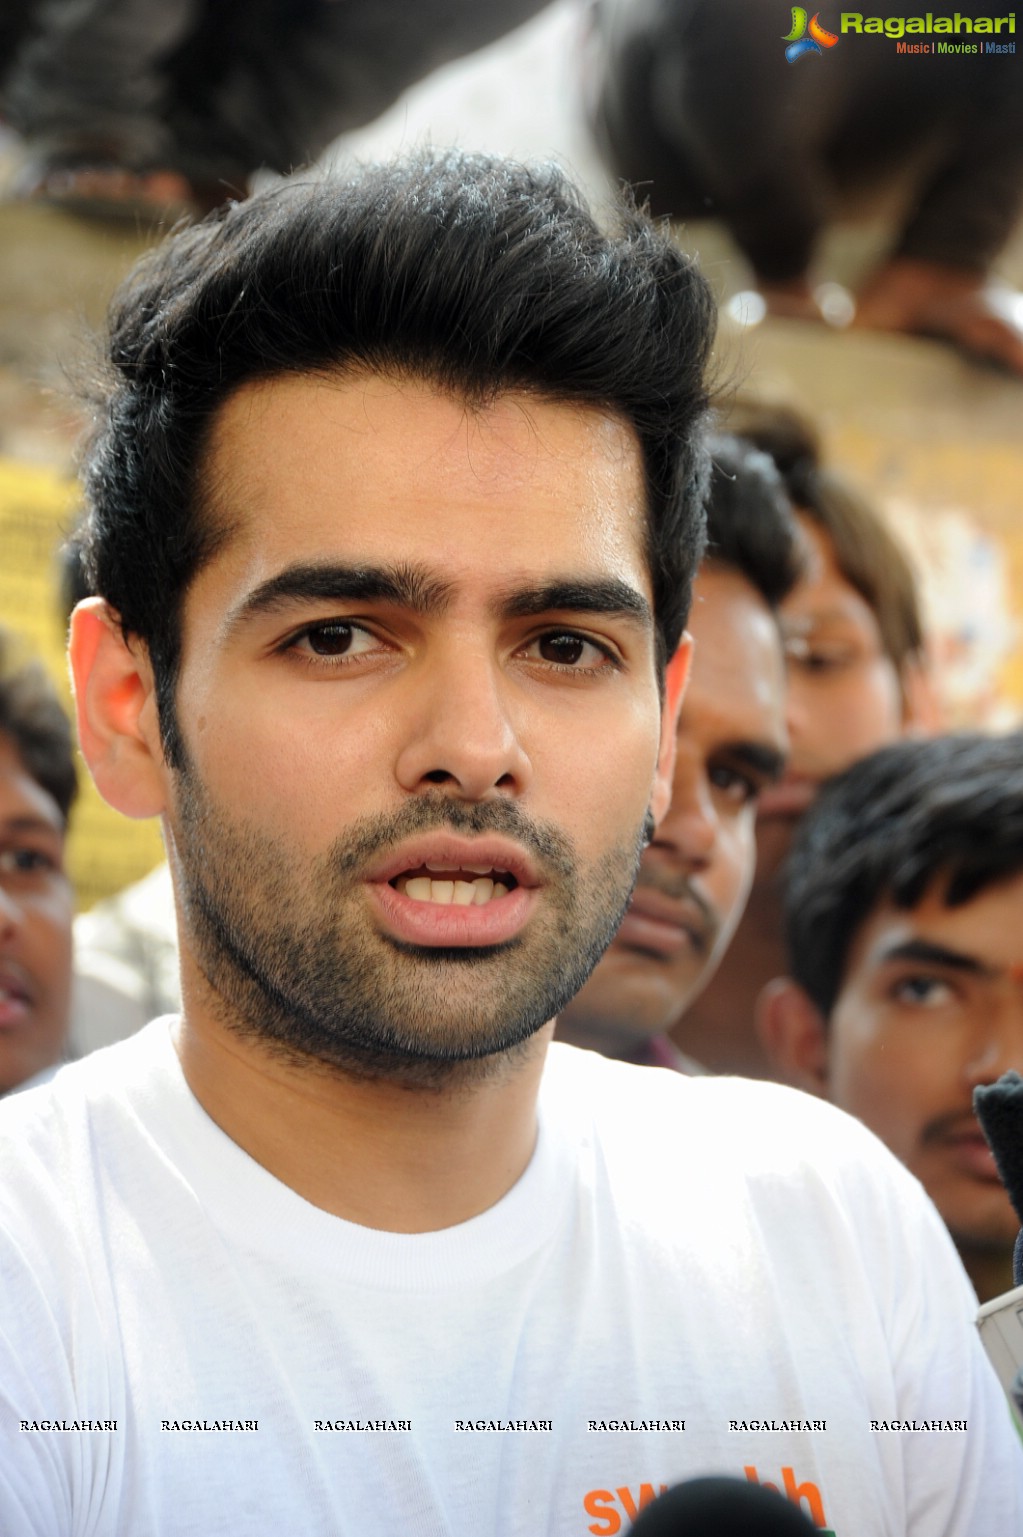 Hero Ram joins Swachh Bharat Campaign